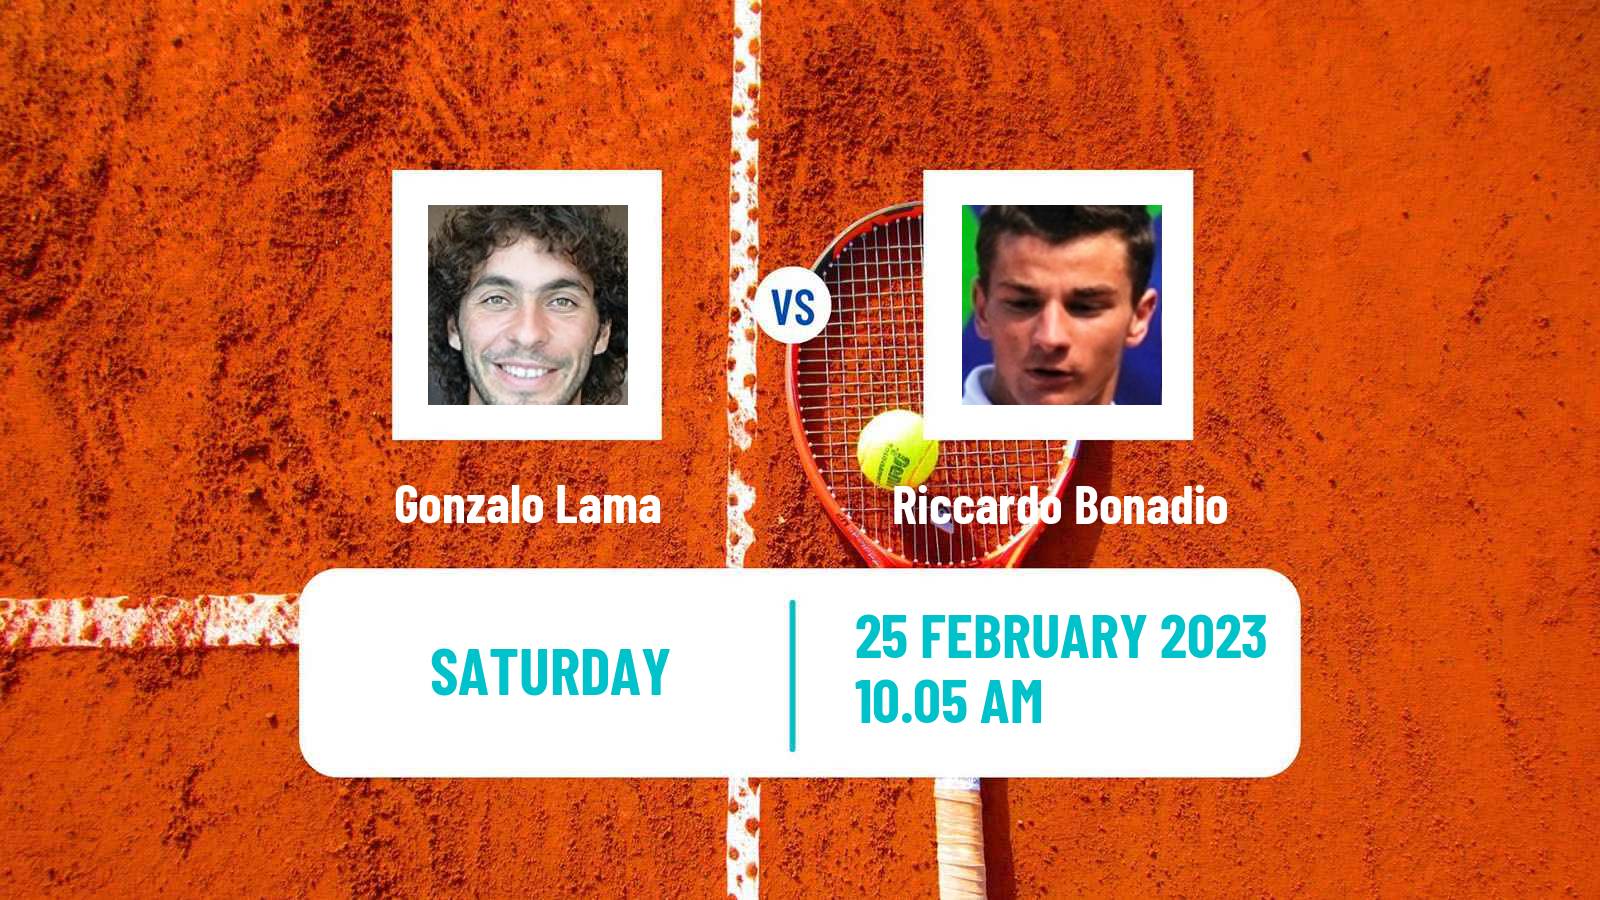 Tennis ATP Santiago Gonzalo Lama - Riccardo Bonadio